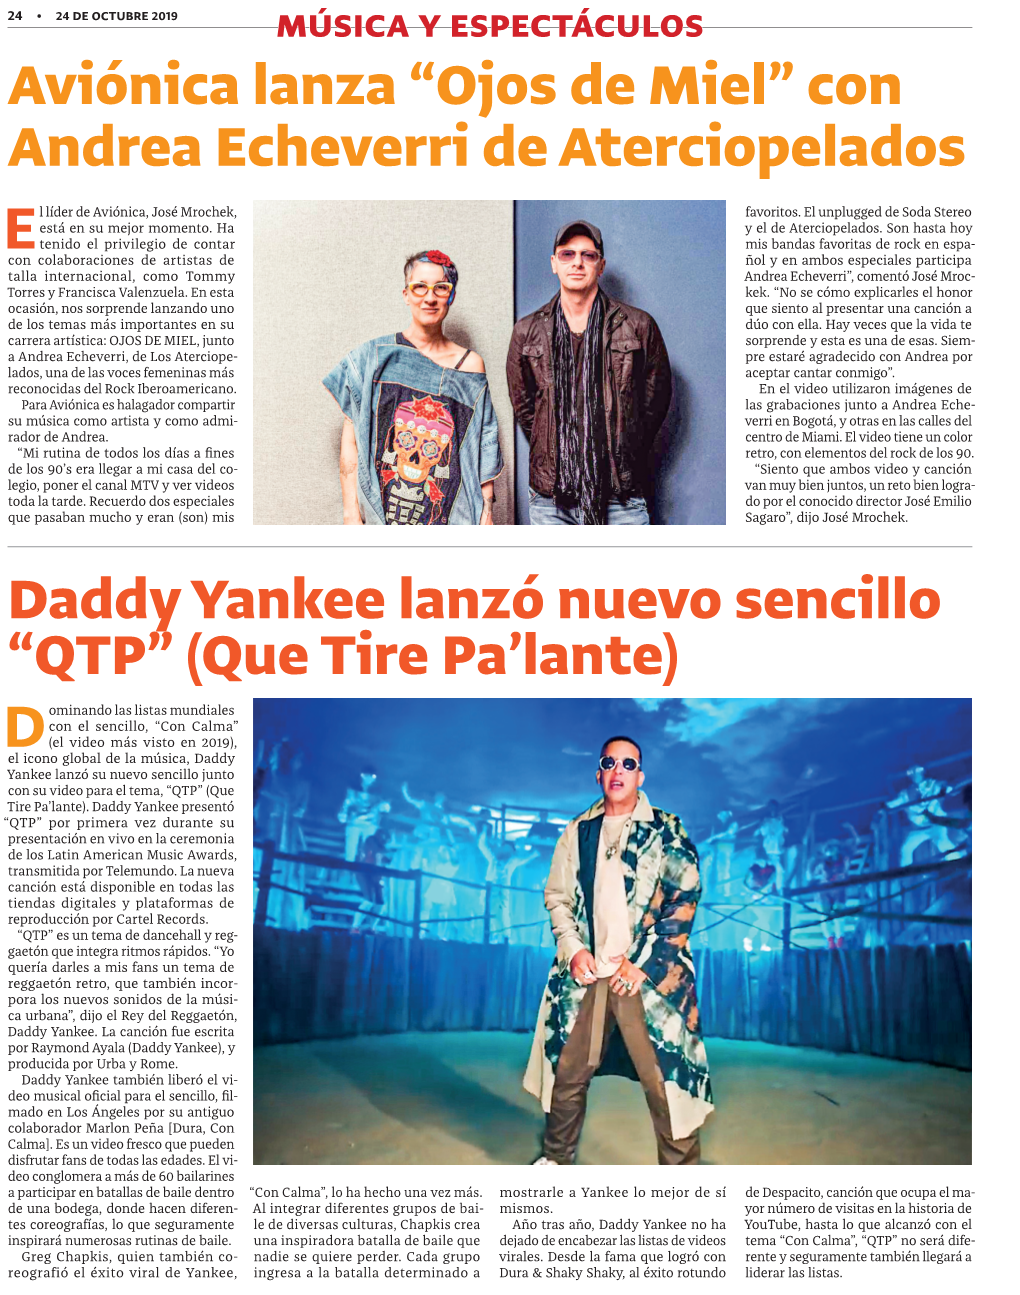 Daddy Yankee Lanzó Nuevo Sencillo “QTP” (Que Tire Pa'lante) Aviónica Lanza “Ojos De Miel” Con Andrea Echeverri De